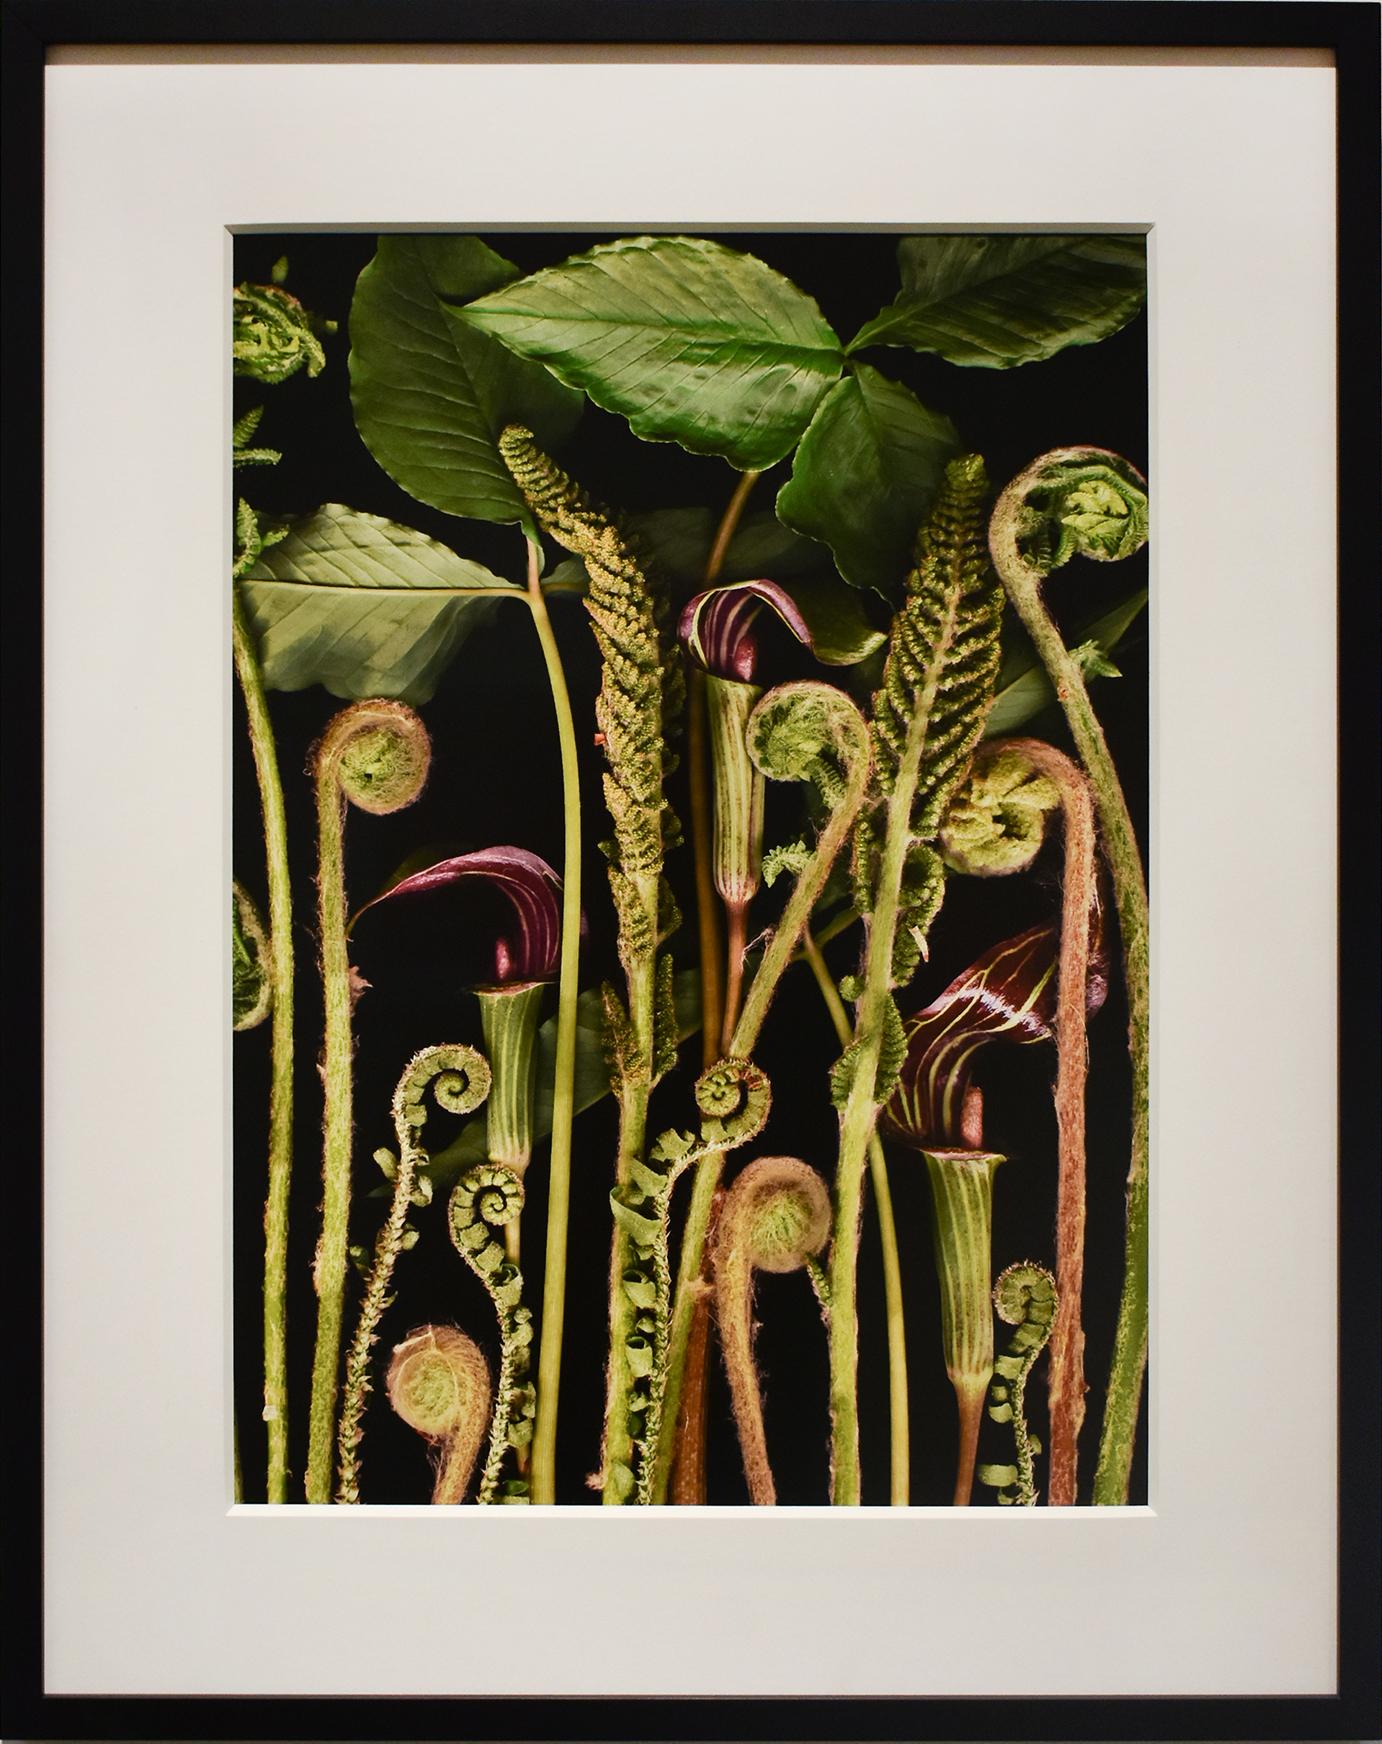 Woodland Night (Modern Still Life Photograph, Green Plants on Black, Framed)  1